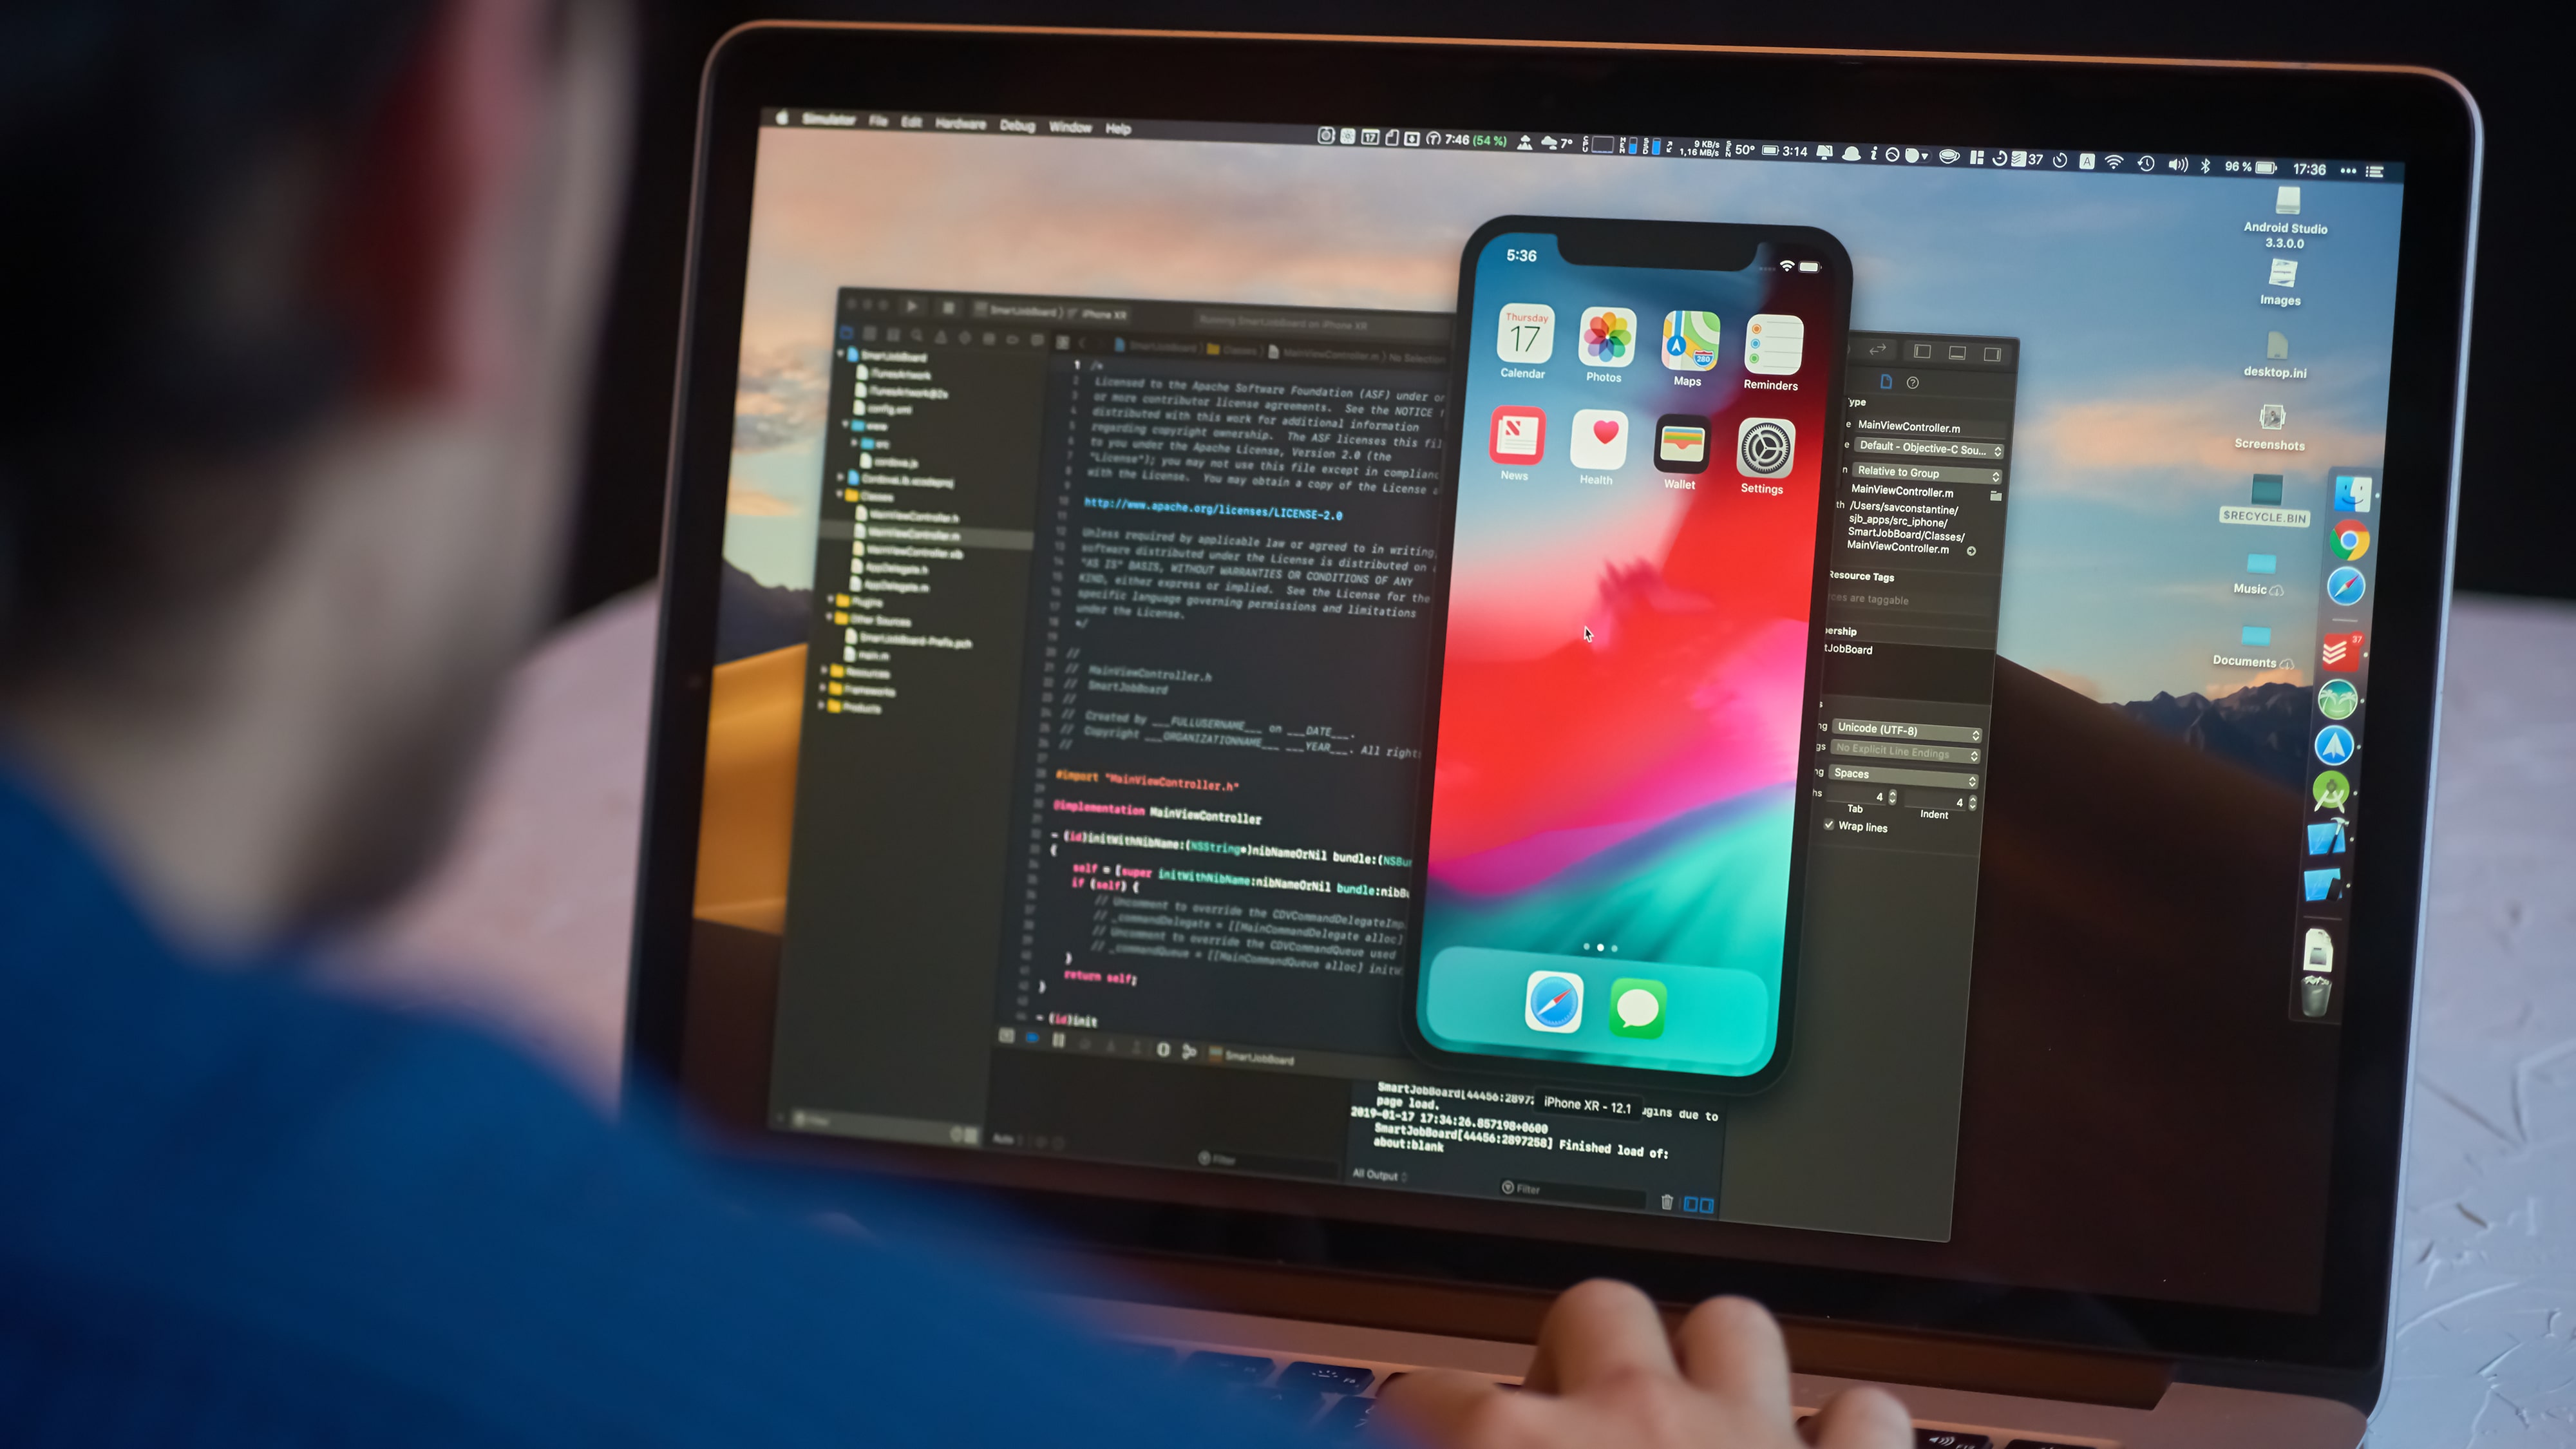 Developer editing iPhone lock screen on laptop